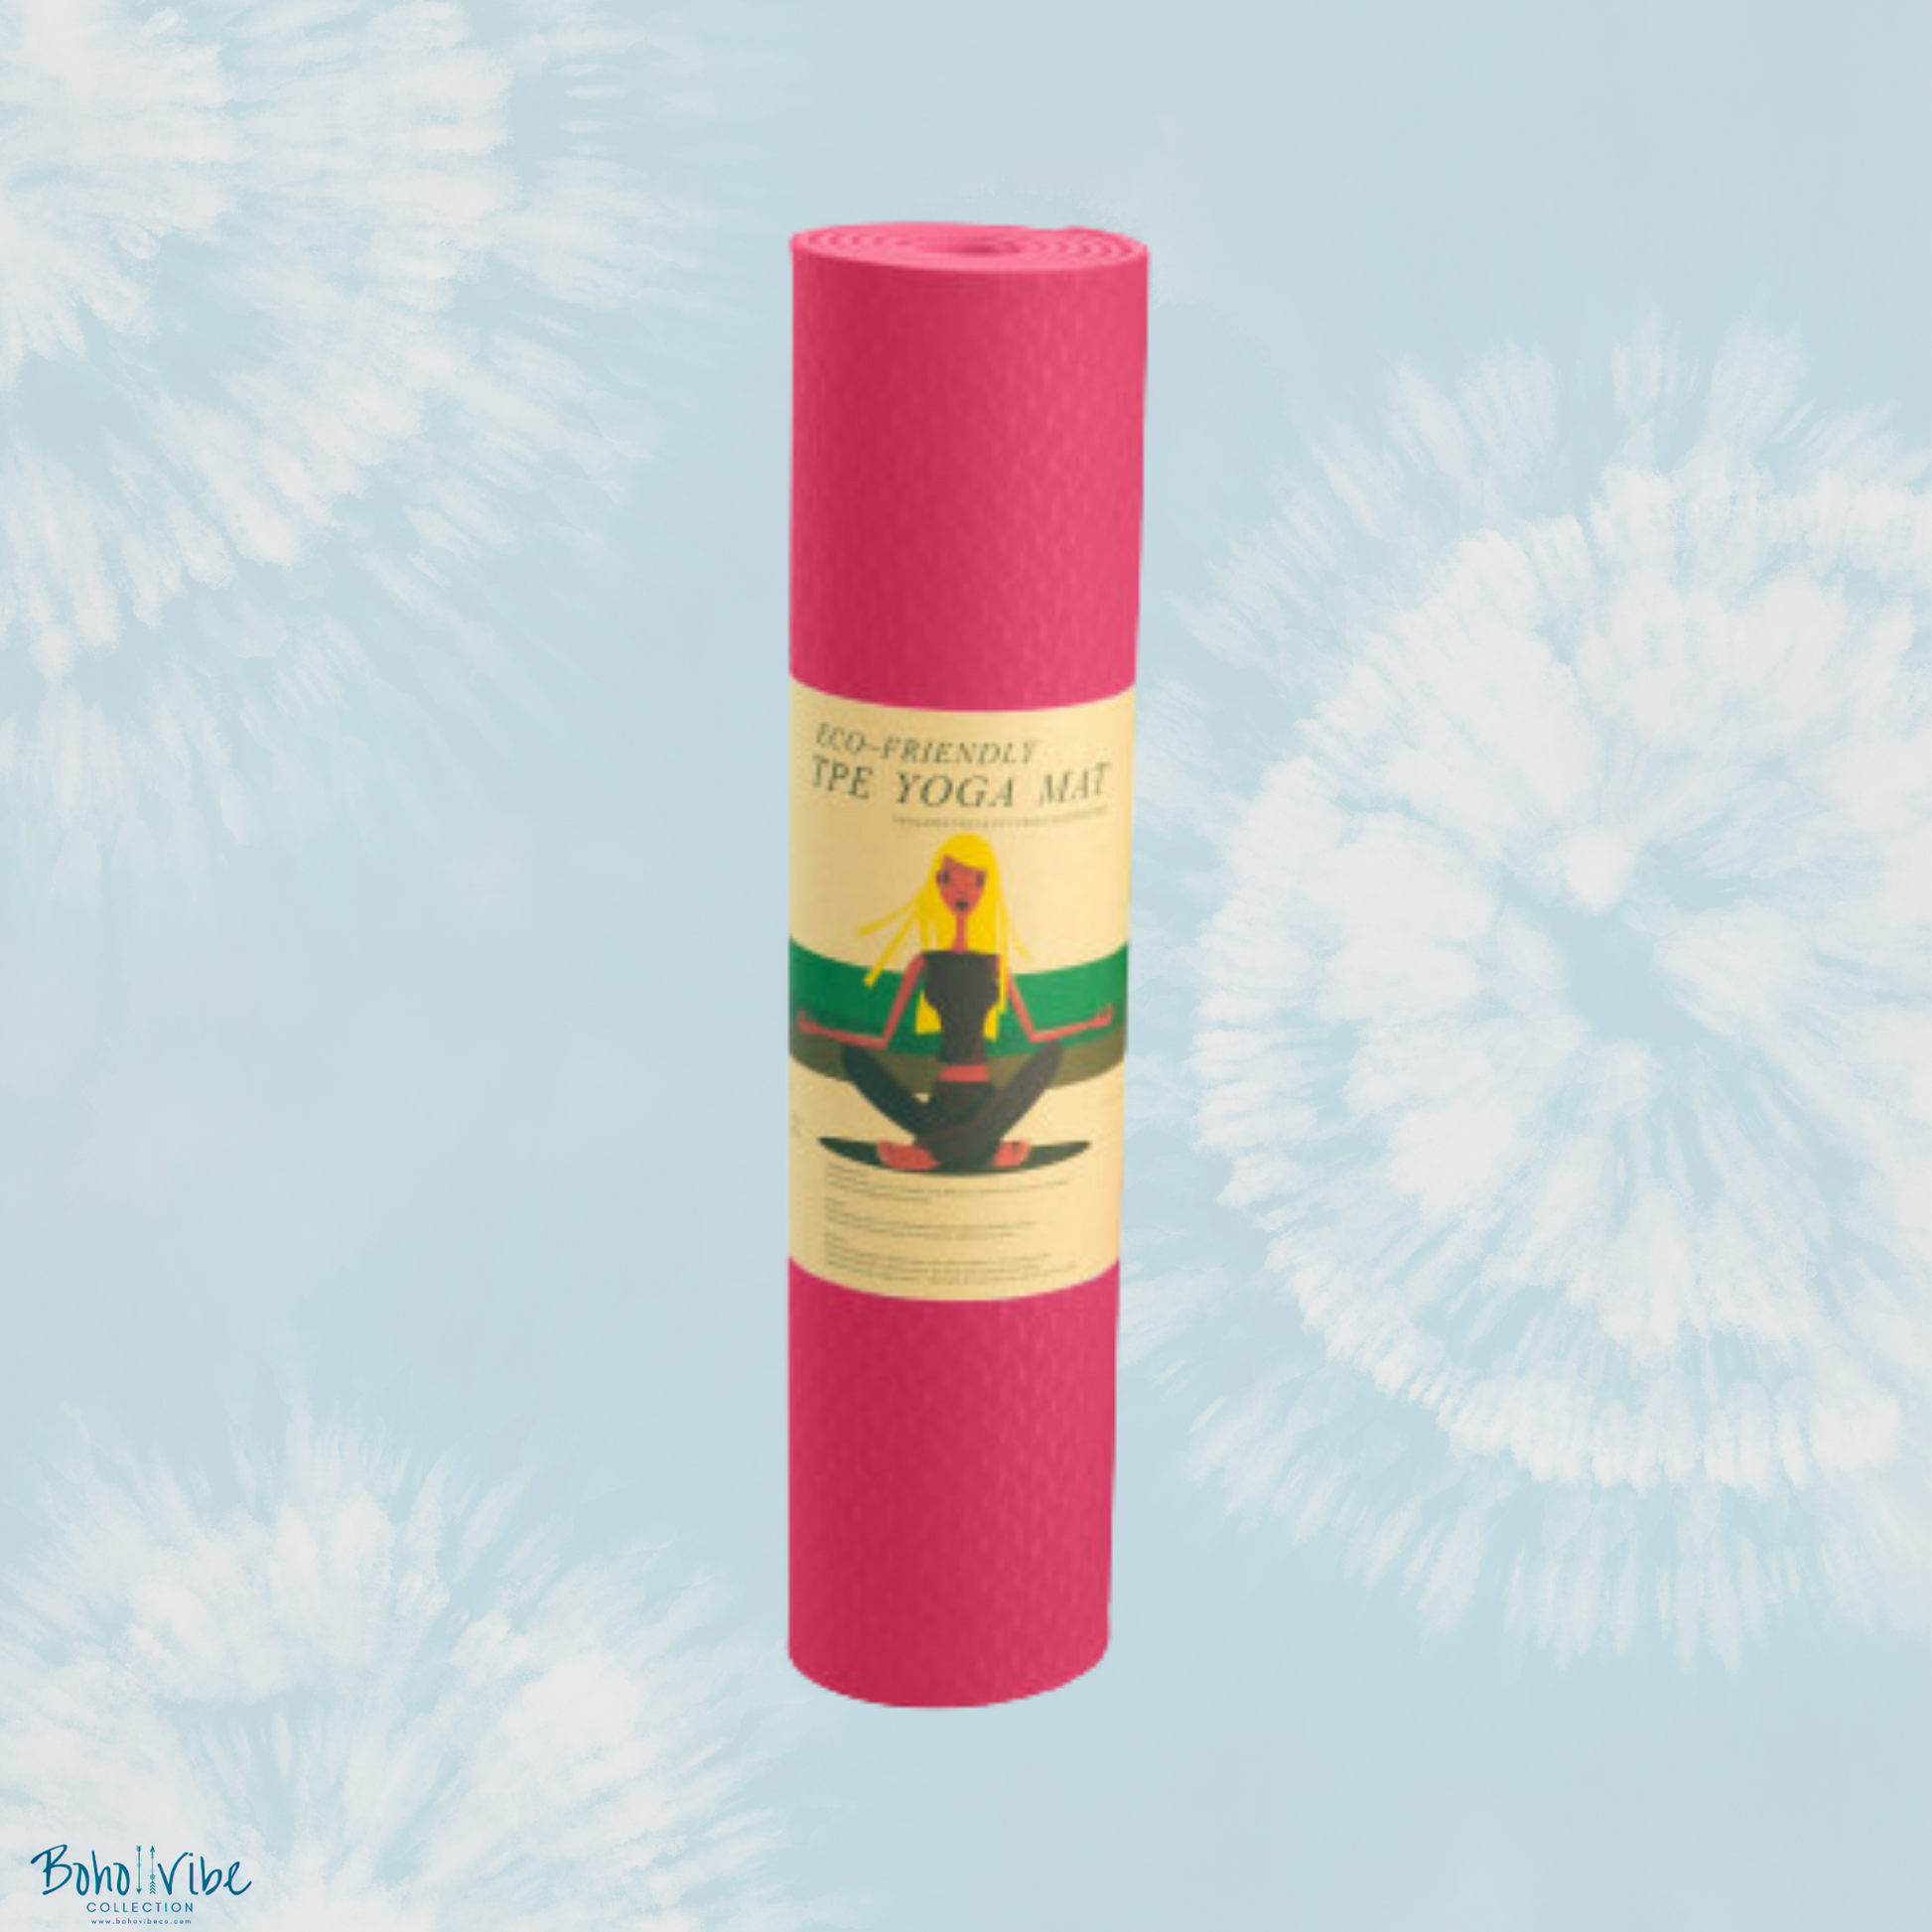 Boho ↡↟ Vibe Collection ↠ Powertrain Yoga Pilates Mat Eco-Friendly Rose Pink 6mm